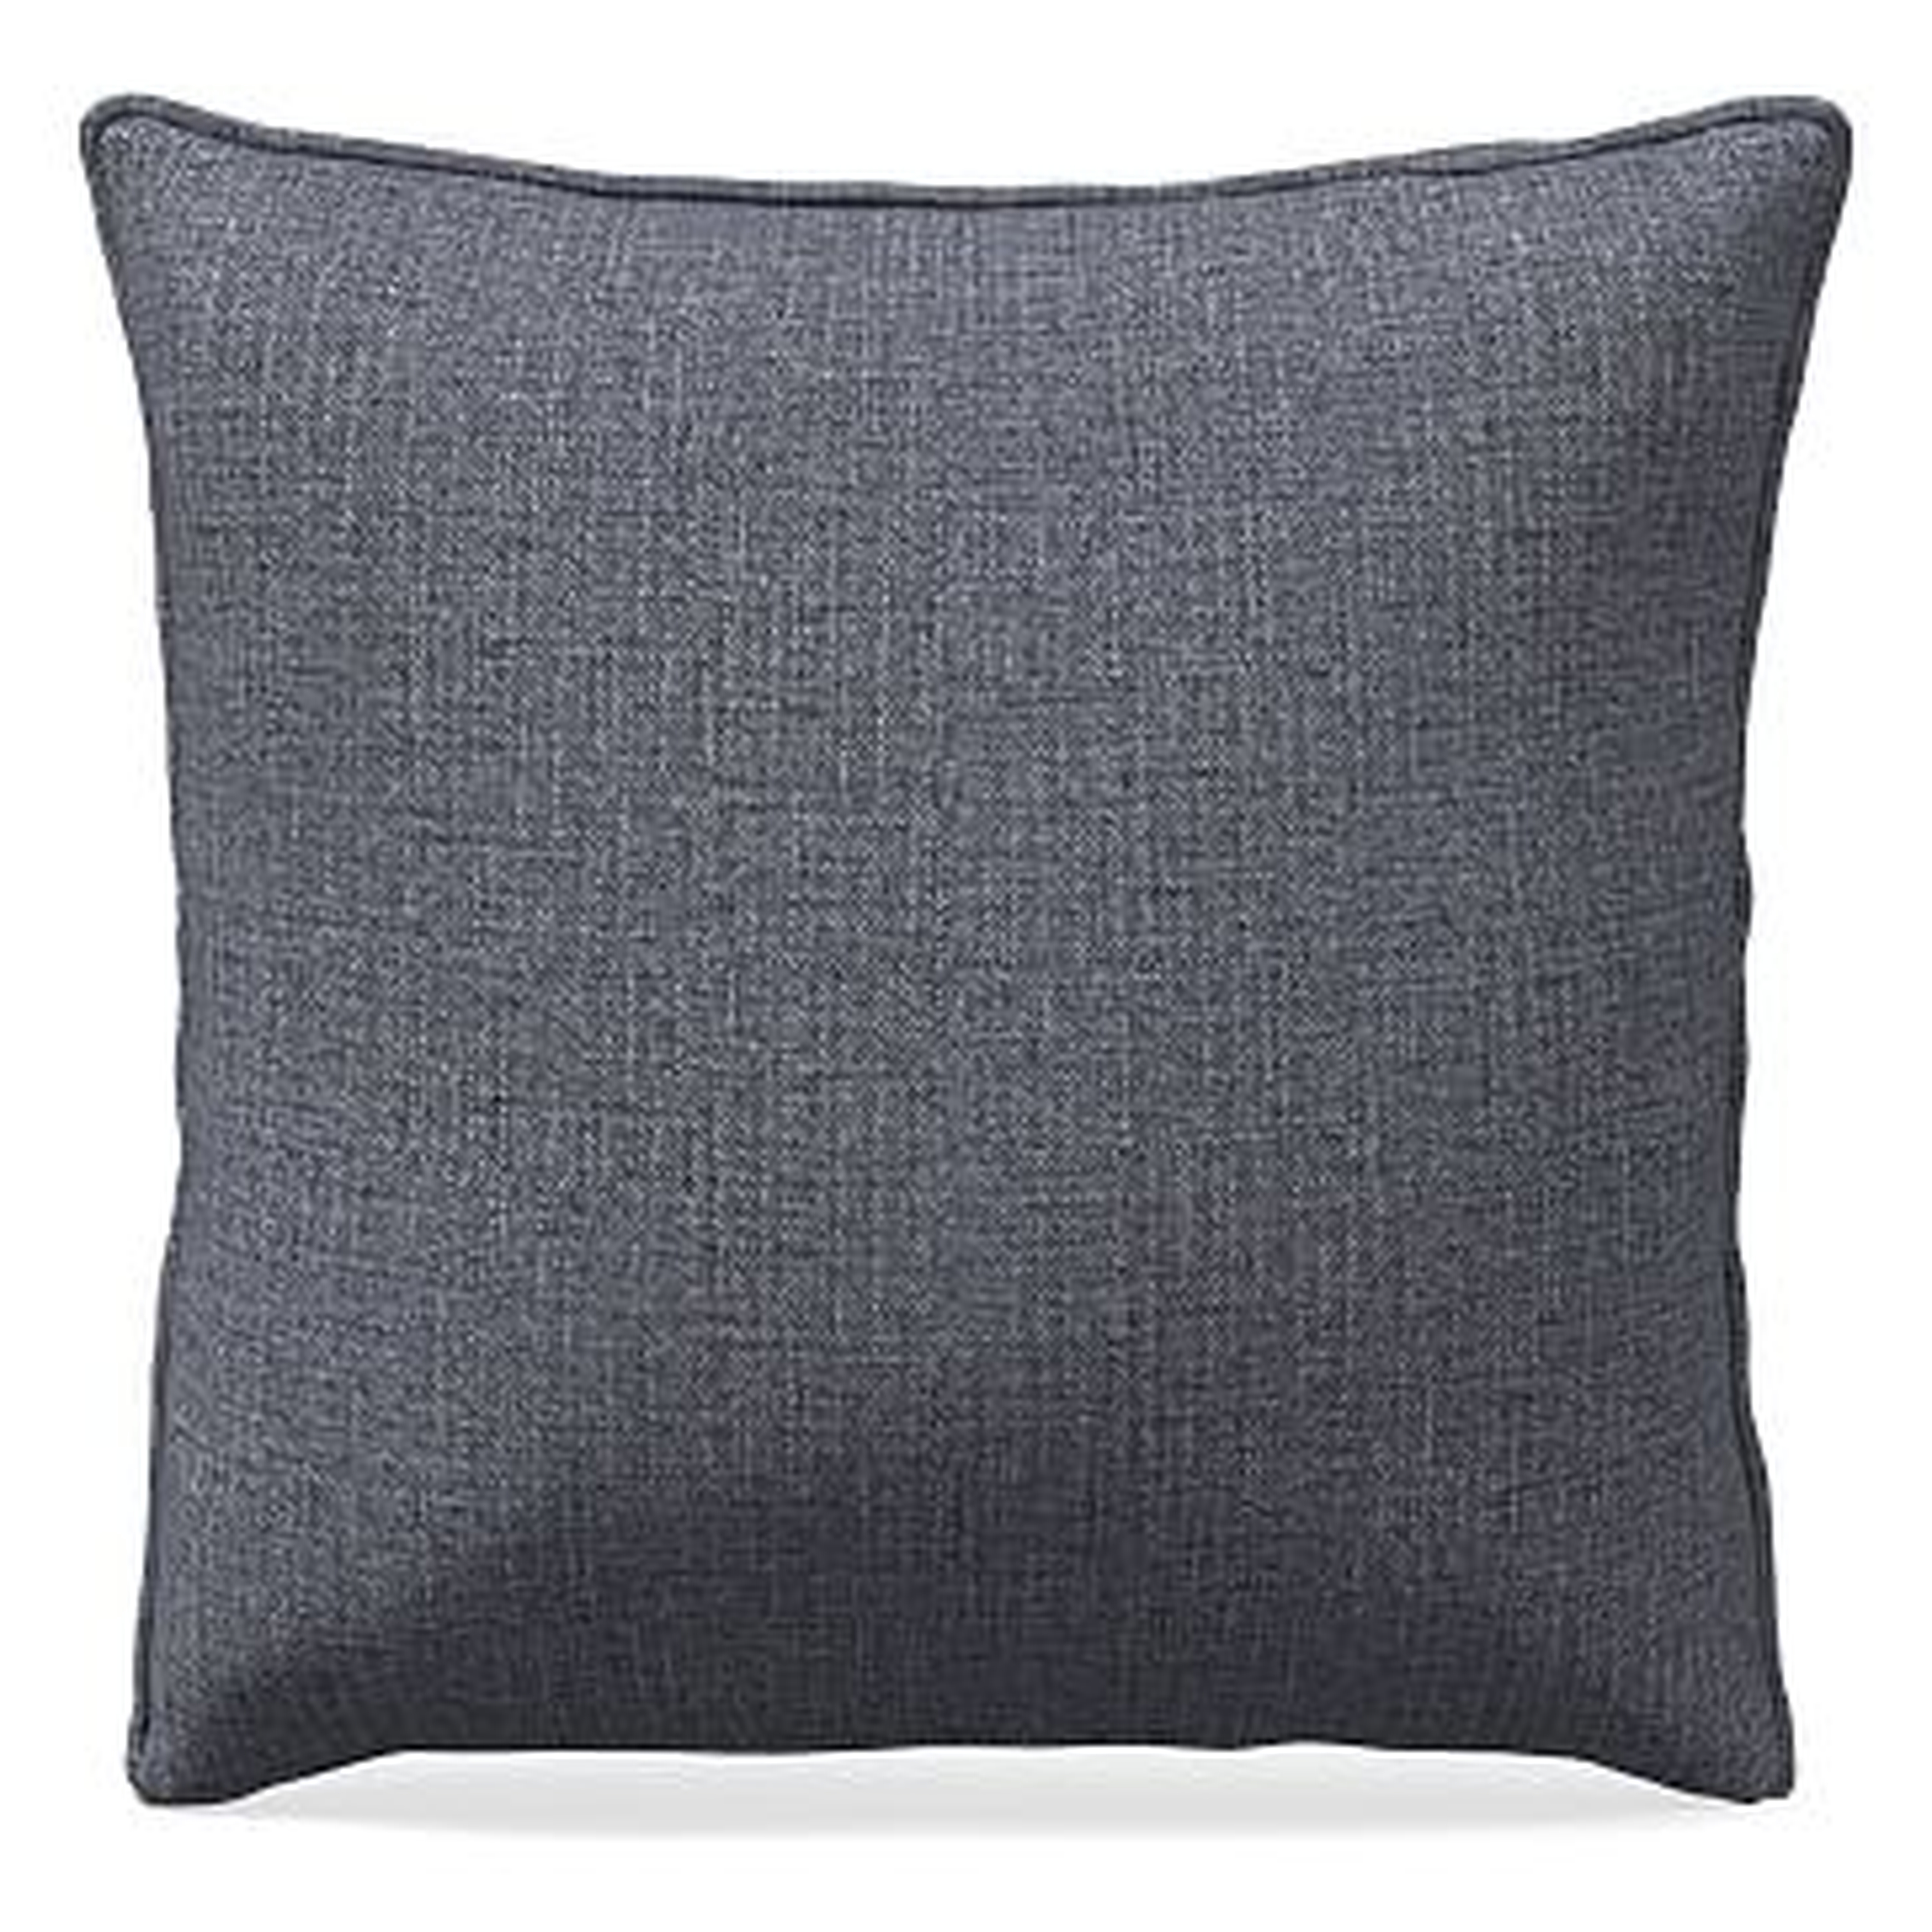 24"x 24" Welt Seam Pillow, N/A, Performance Yarn Dyed Linen Weave, Graphite, N/A - West Elm